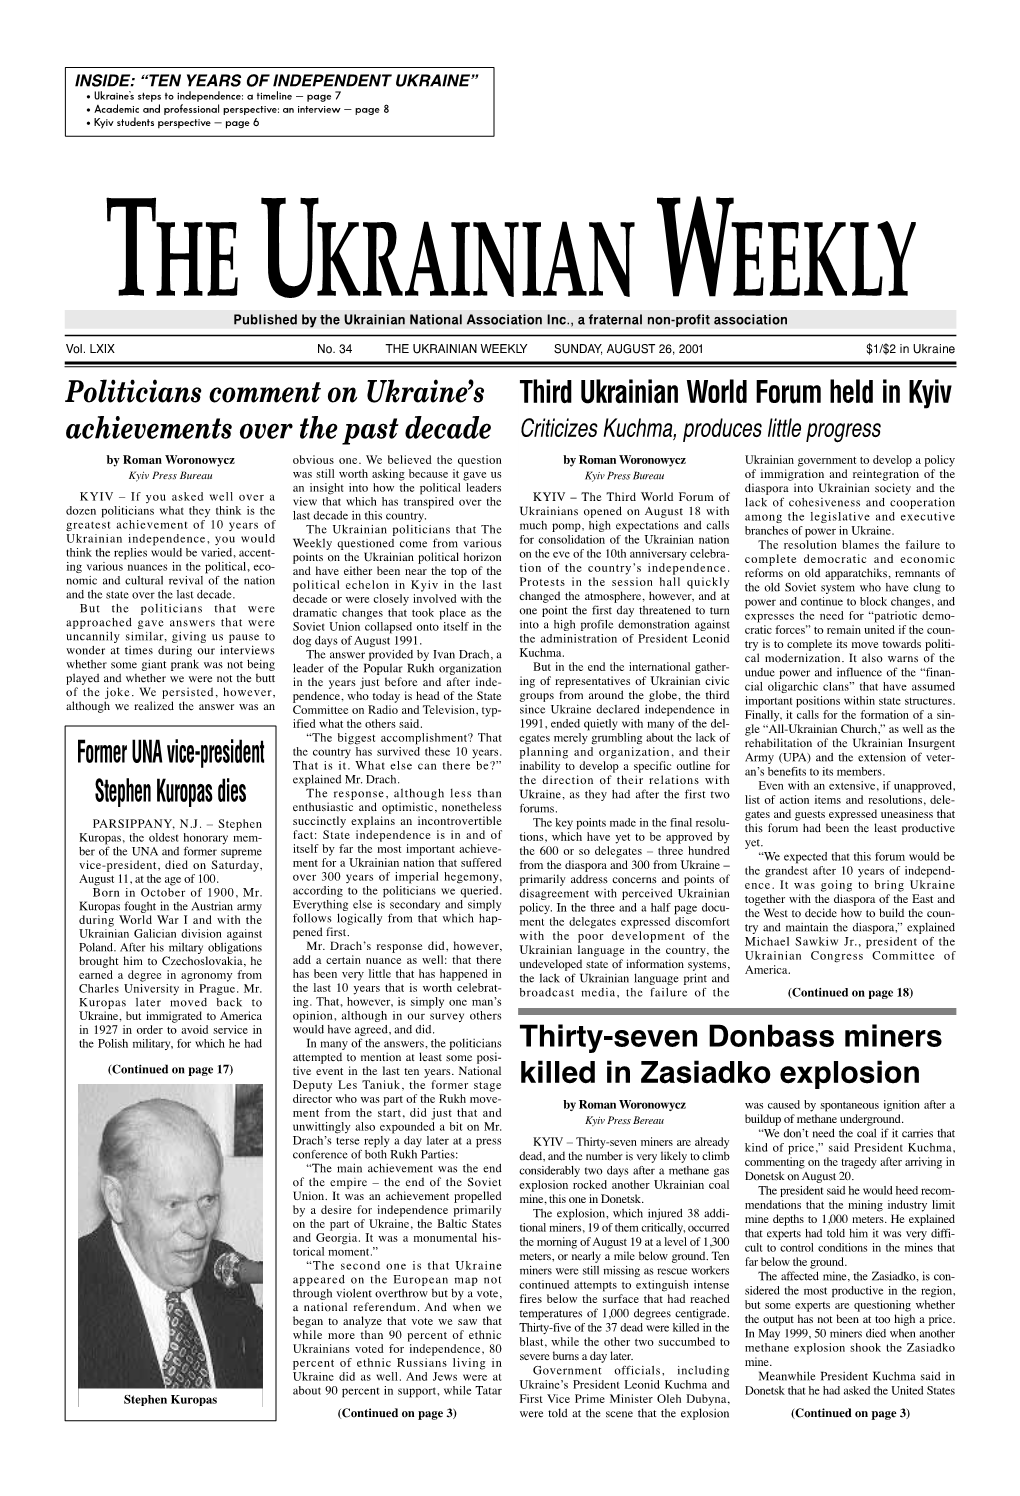 The Ukrainian Weekly 2001, No.34